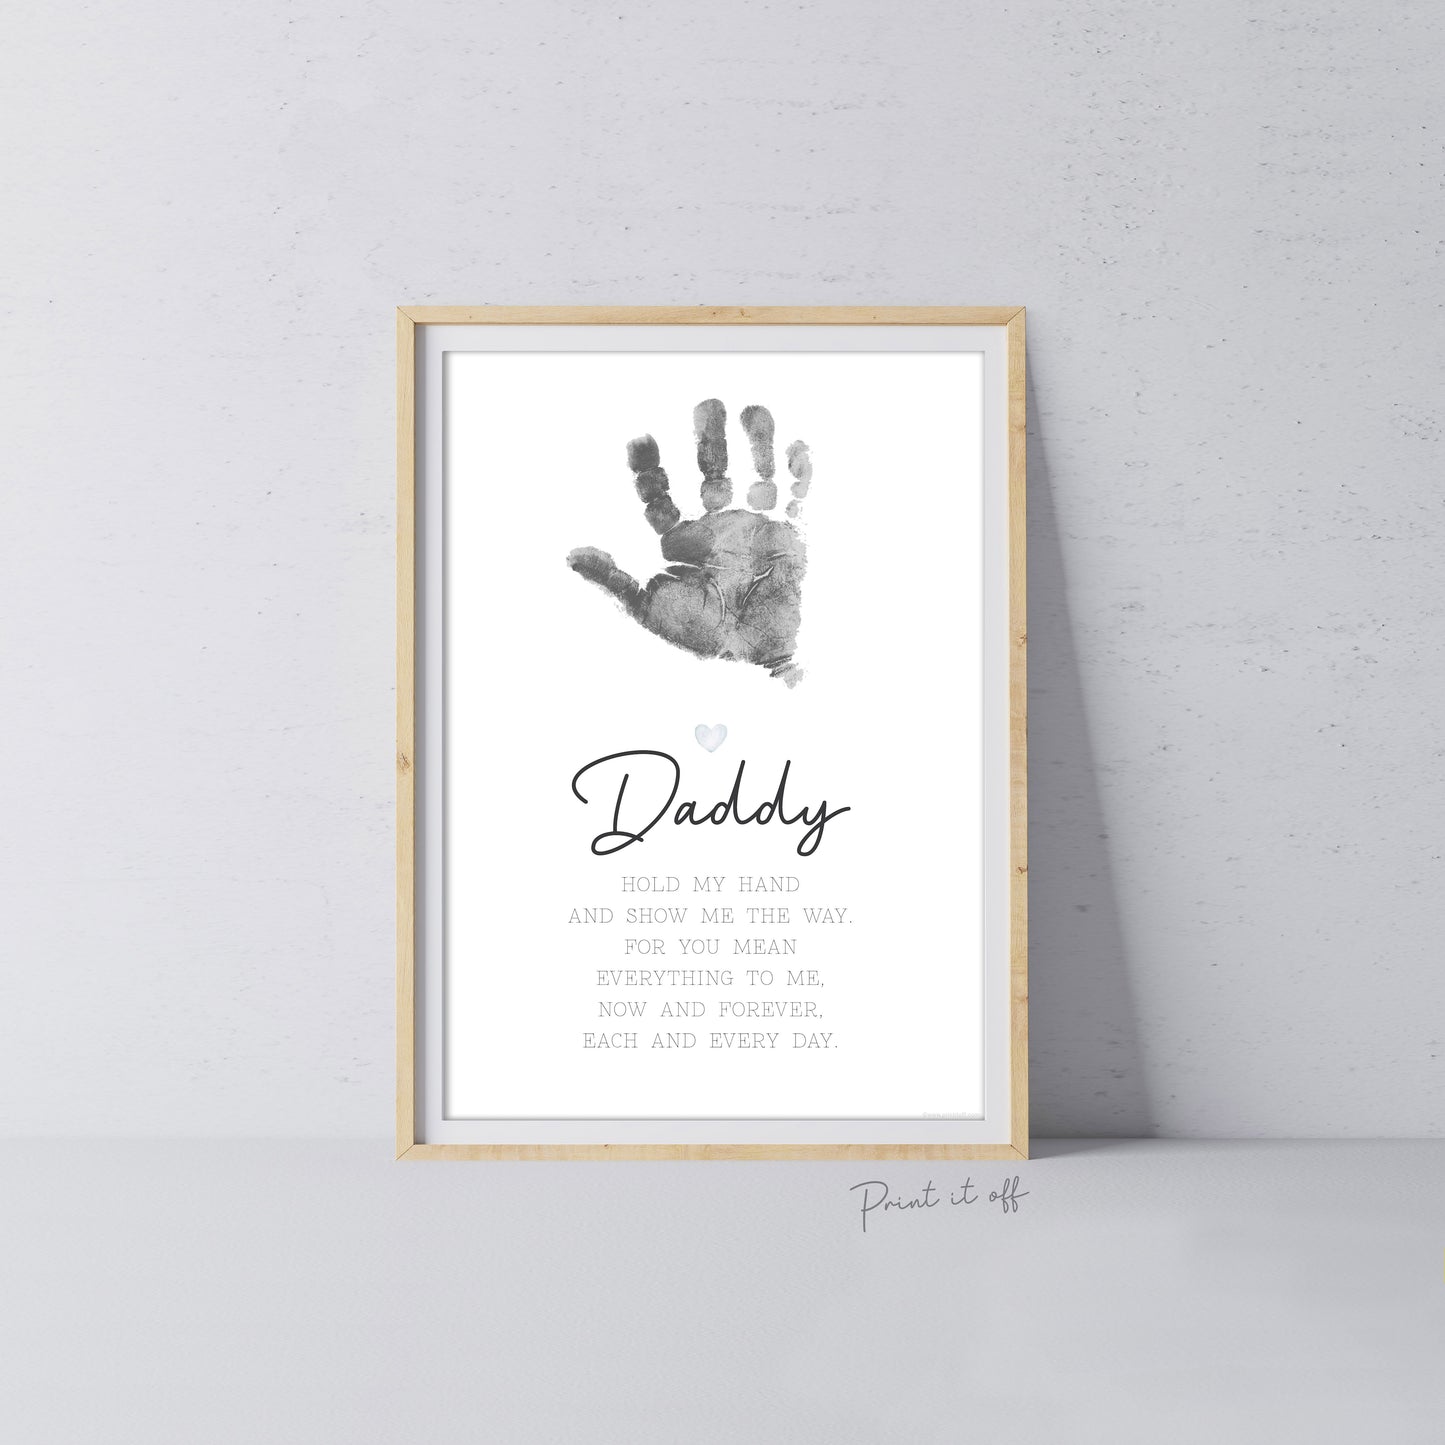 Daddy Handprint Poem / Hand Art Craft Dad Father's Day Birthday / Kids Baby Toddler / Activity Keepsake Gift Card Sign / PRINT IT OFF 0450